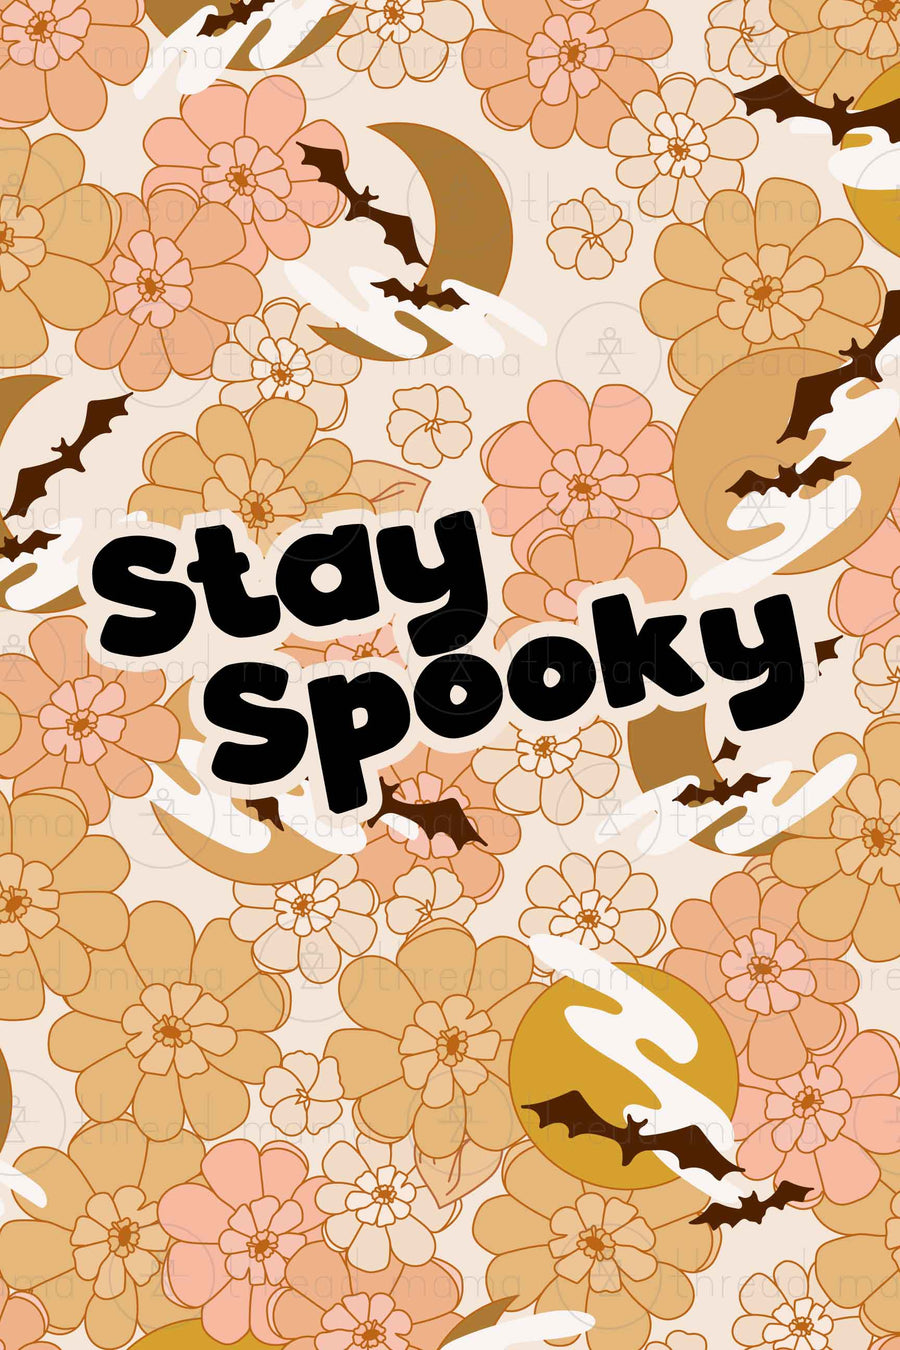 Stay Spooky - Version 2